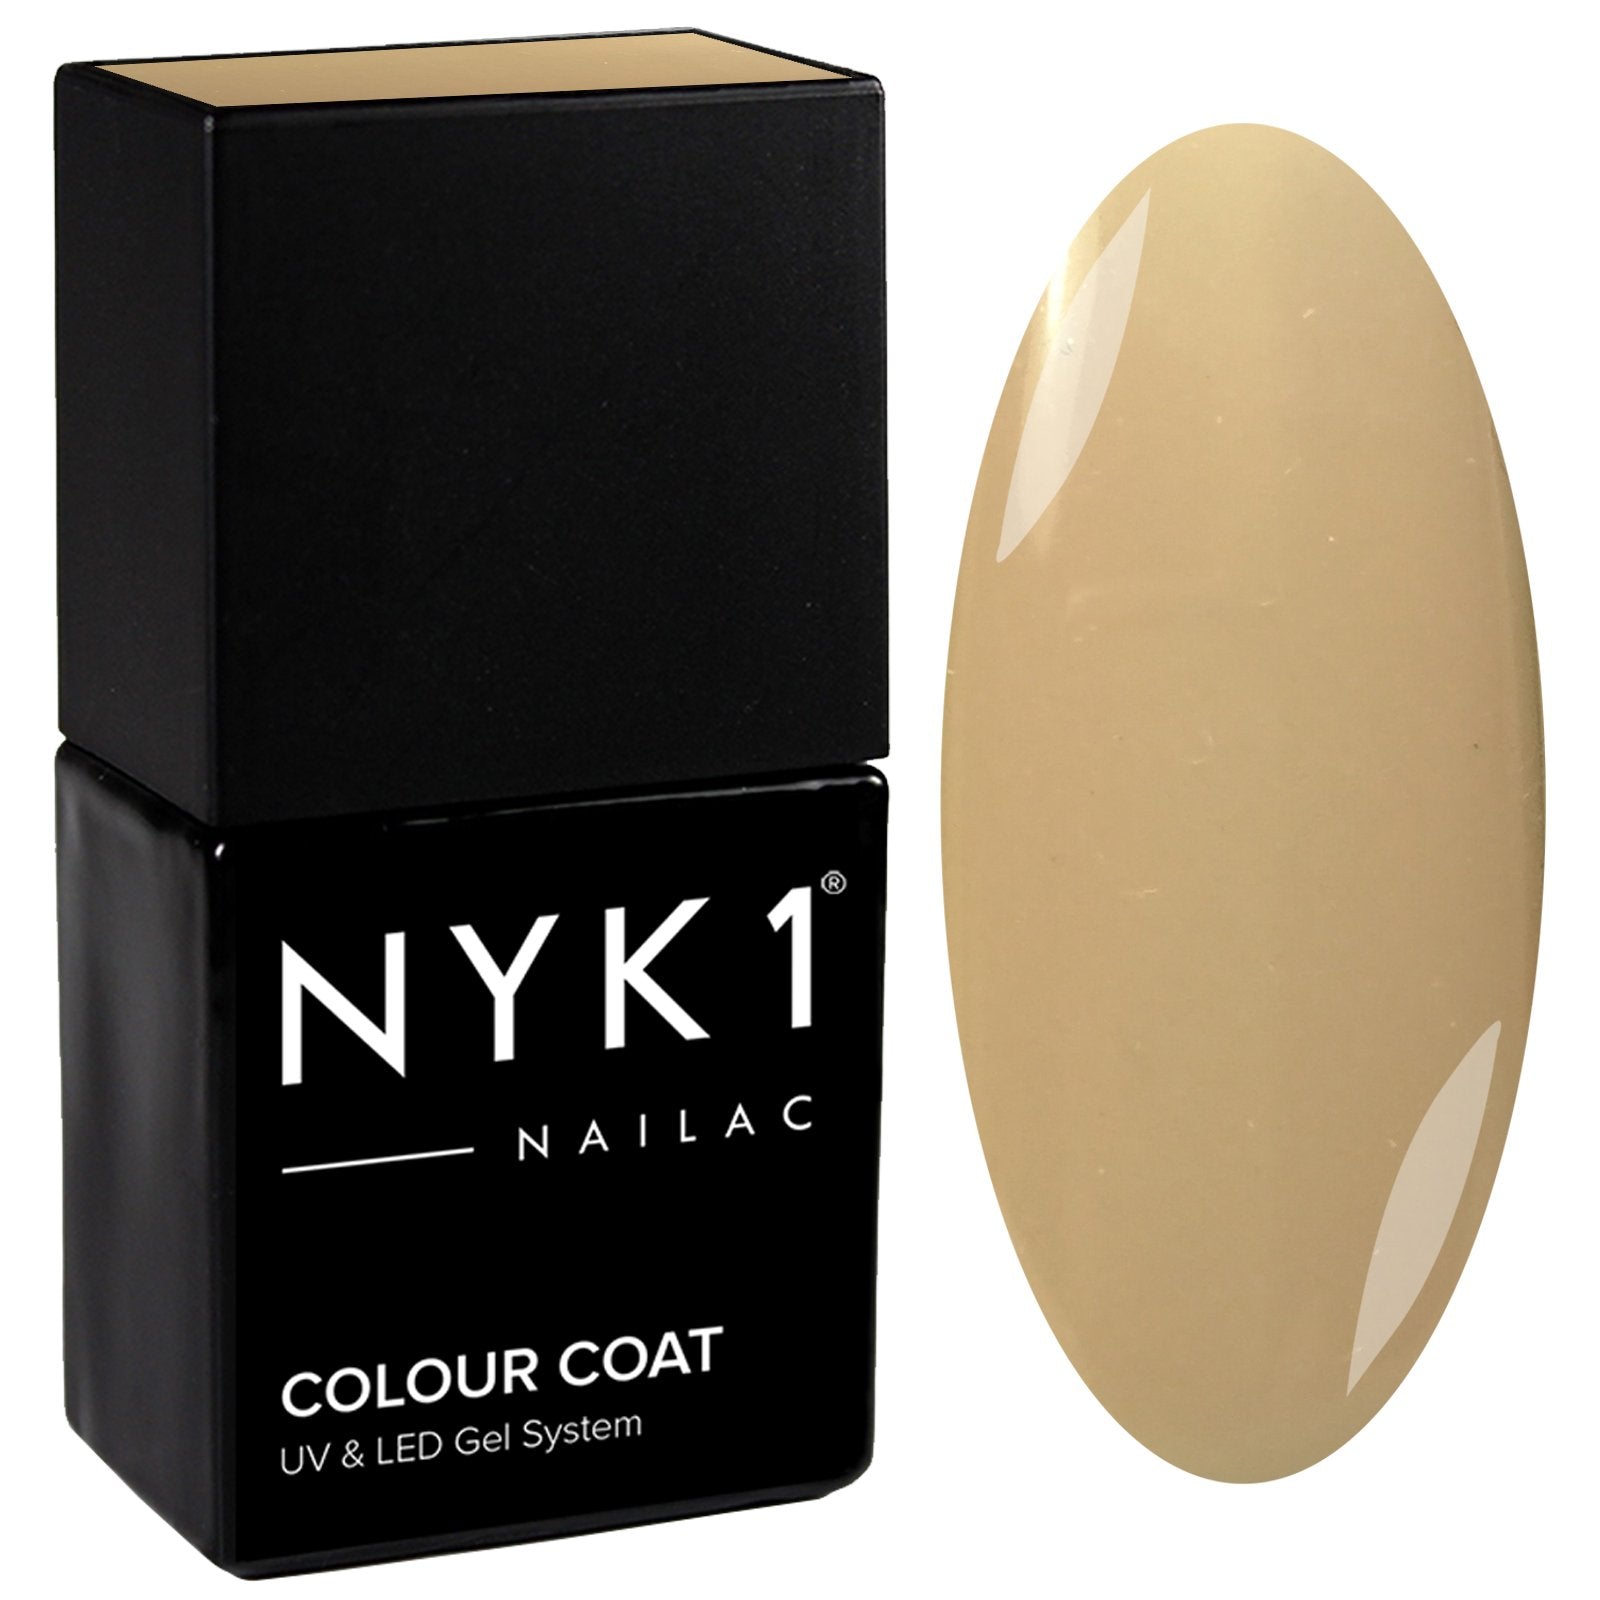 NYK1 Nailac Nude Neutral Soft Beige Gloss Nail Gel Polish